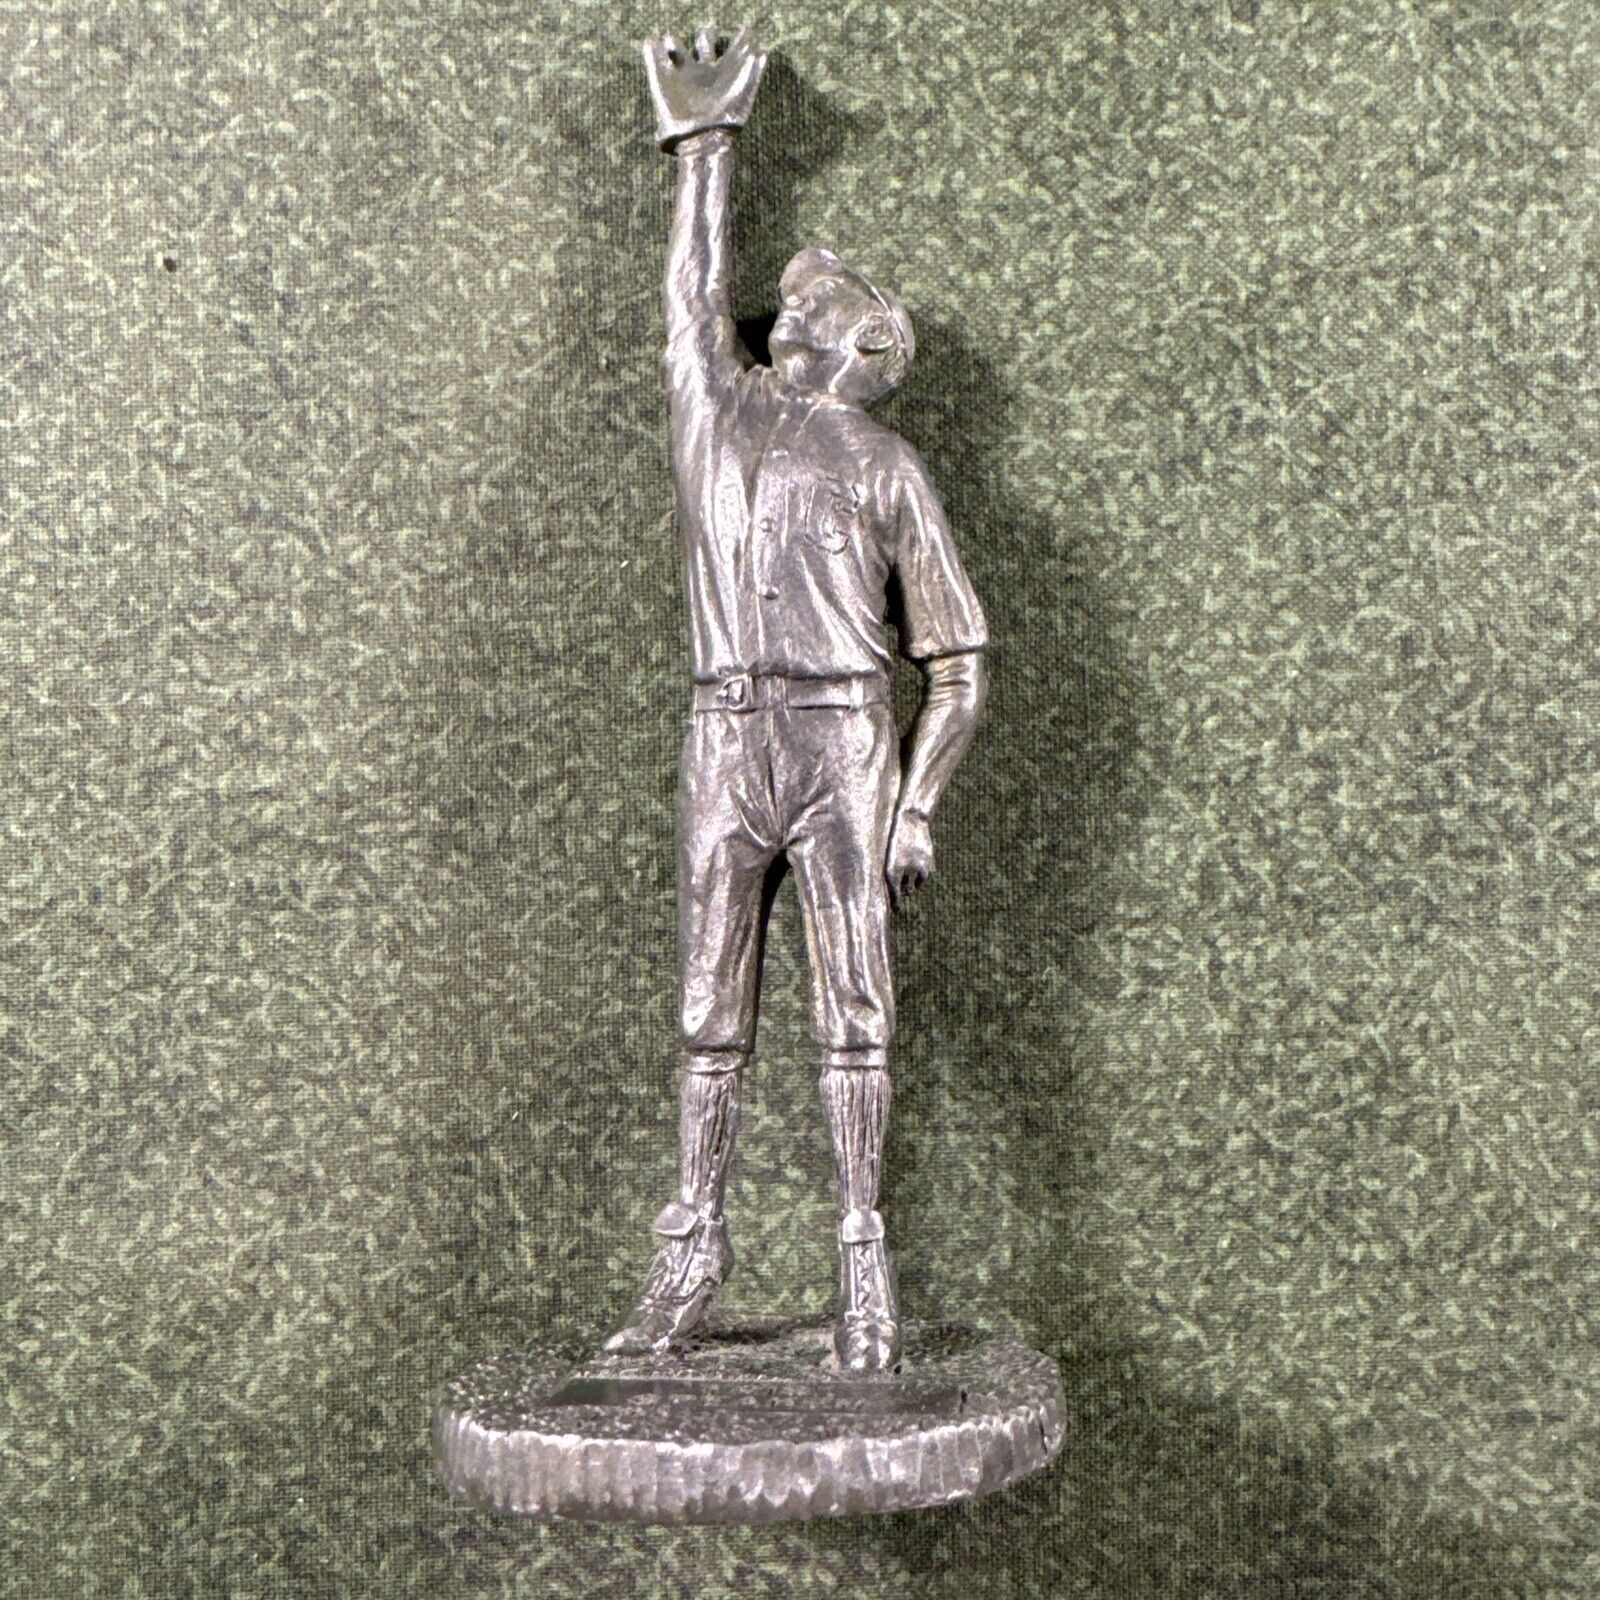 Tris speaker signature miniature 1979 pewter mini statue Hall of Fame Cleveland